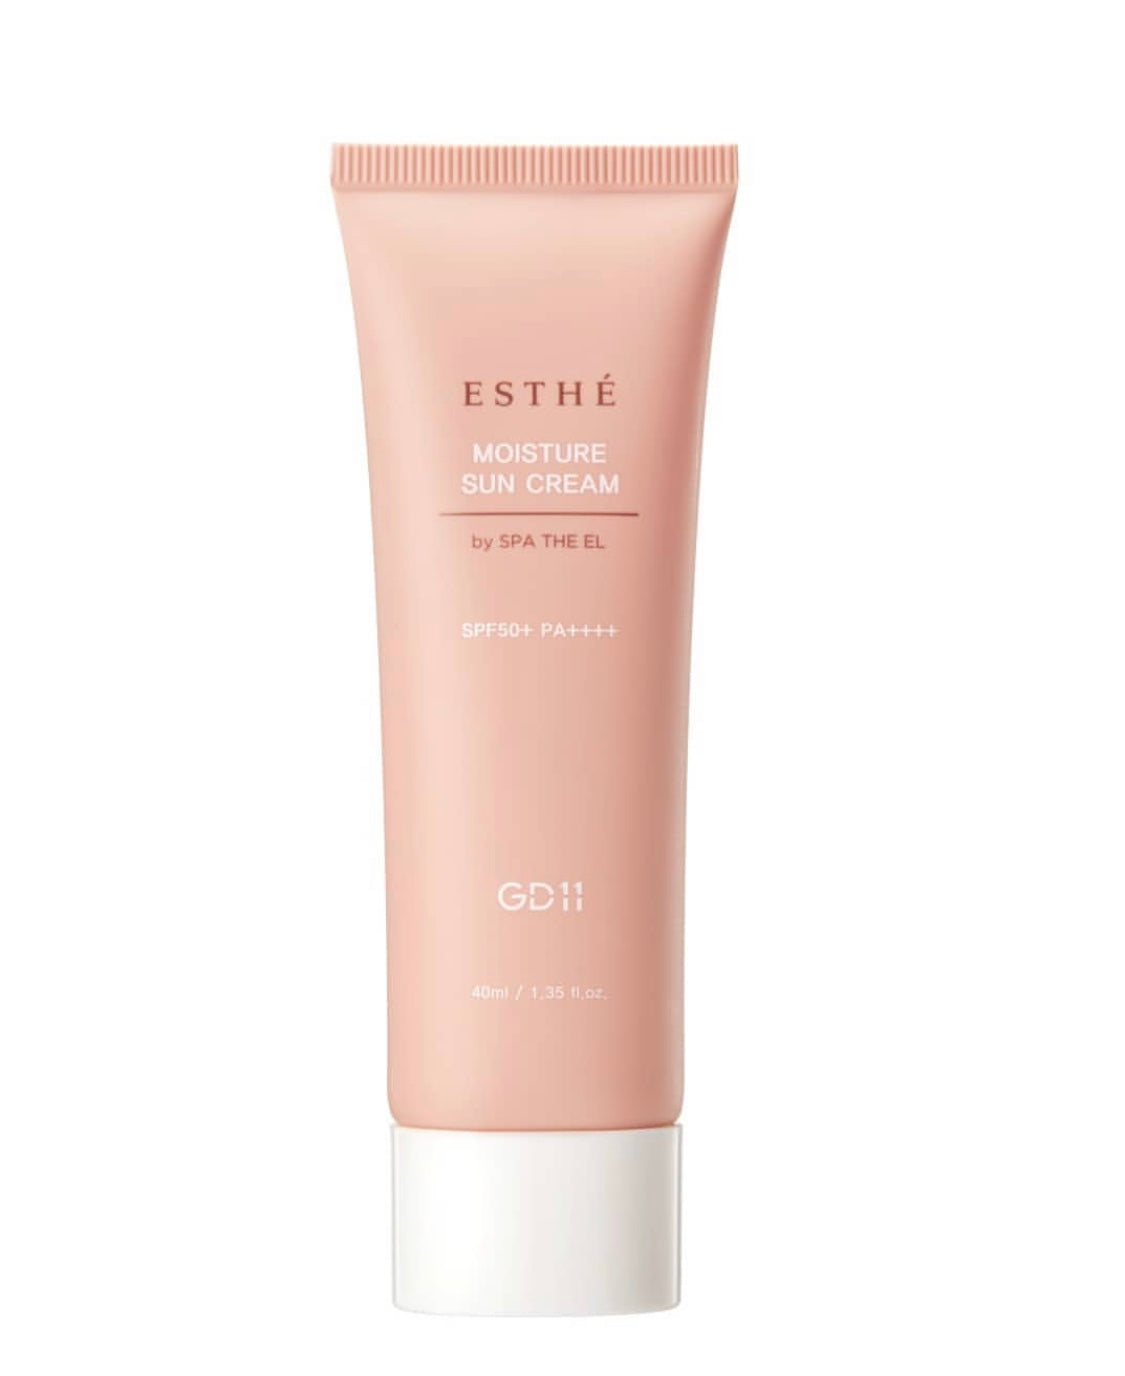 ESTHE Moisture Sun Cream - Kbeauty